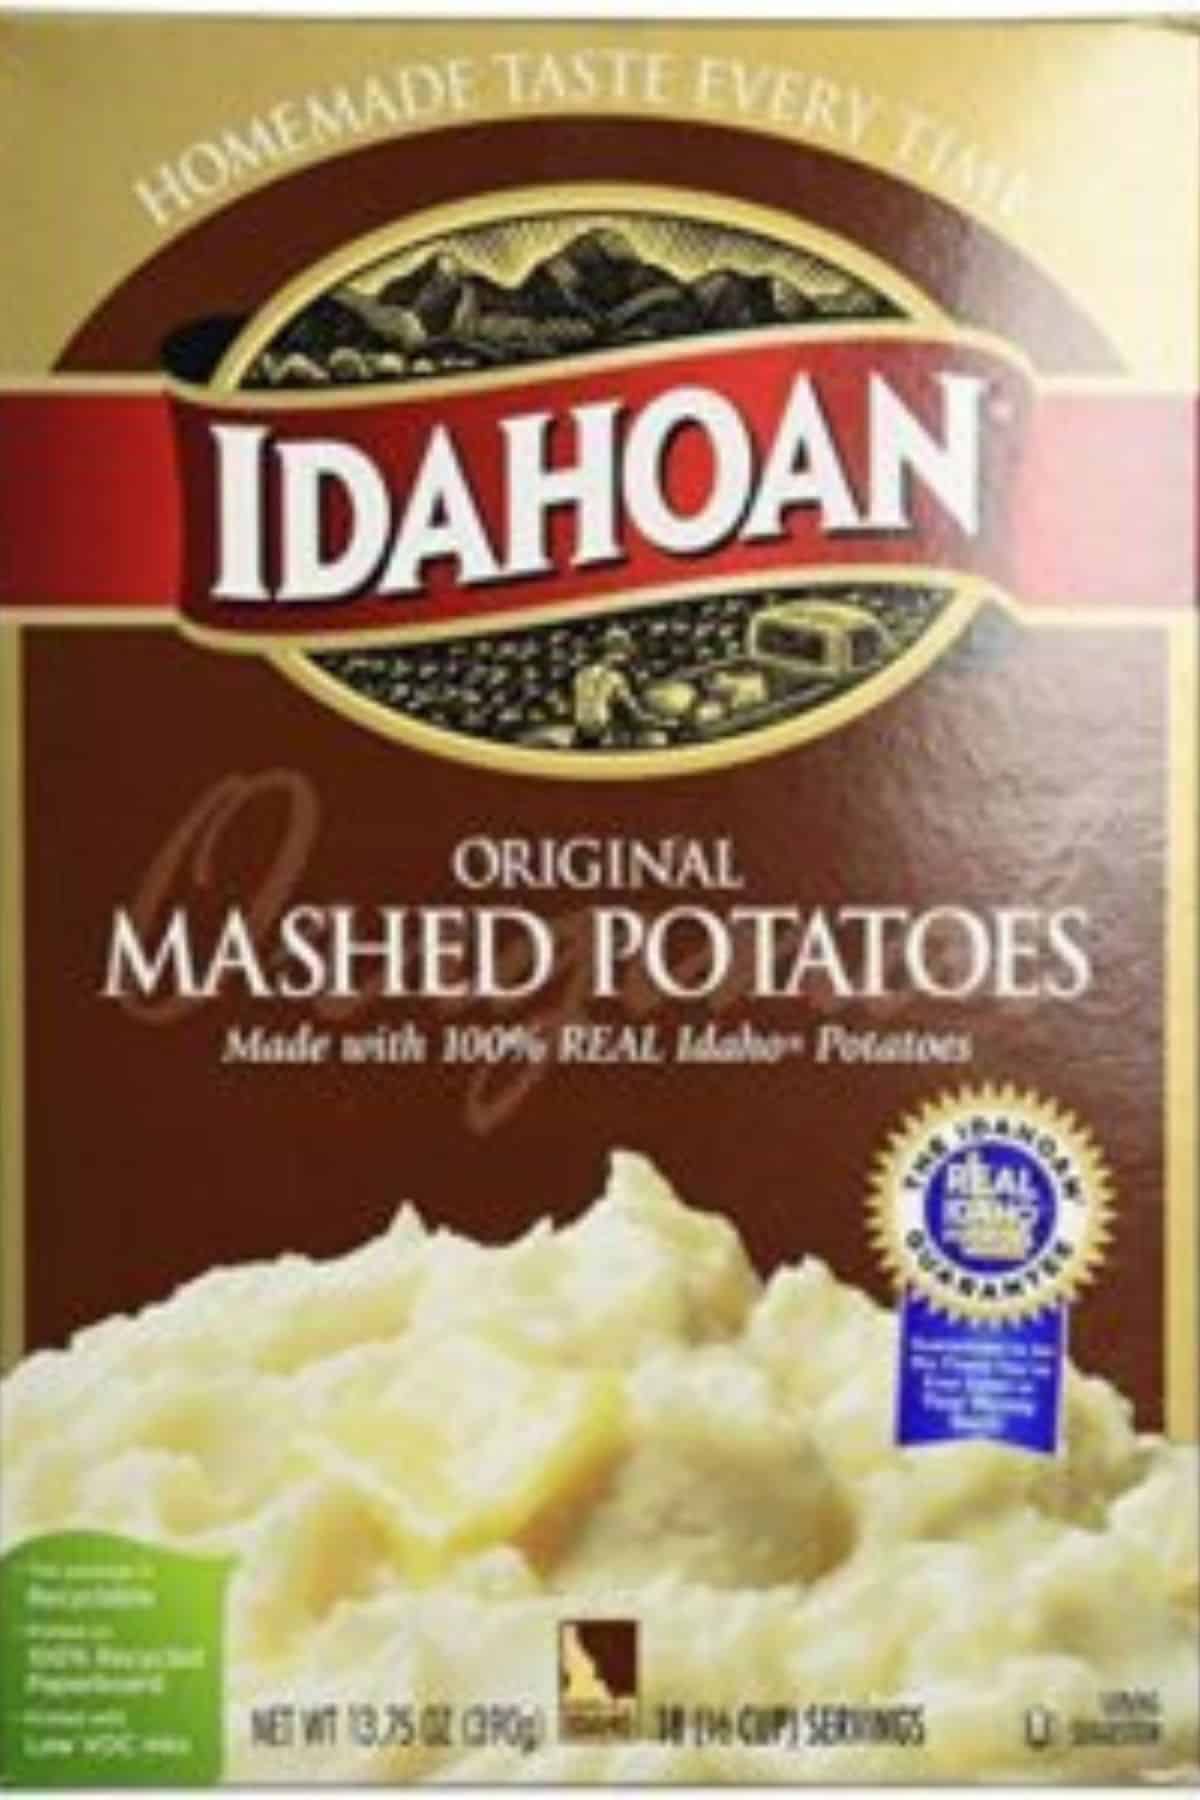 a box of Idahoan potato flakes